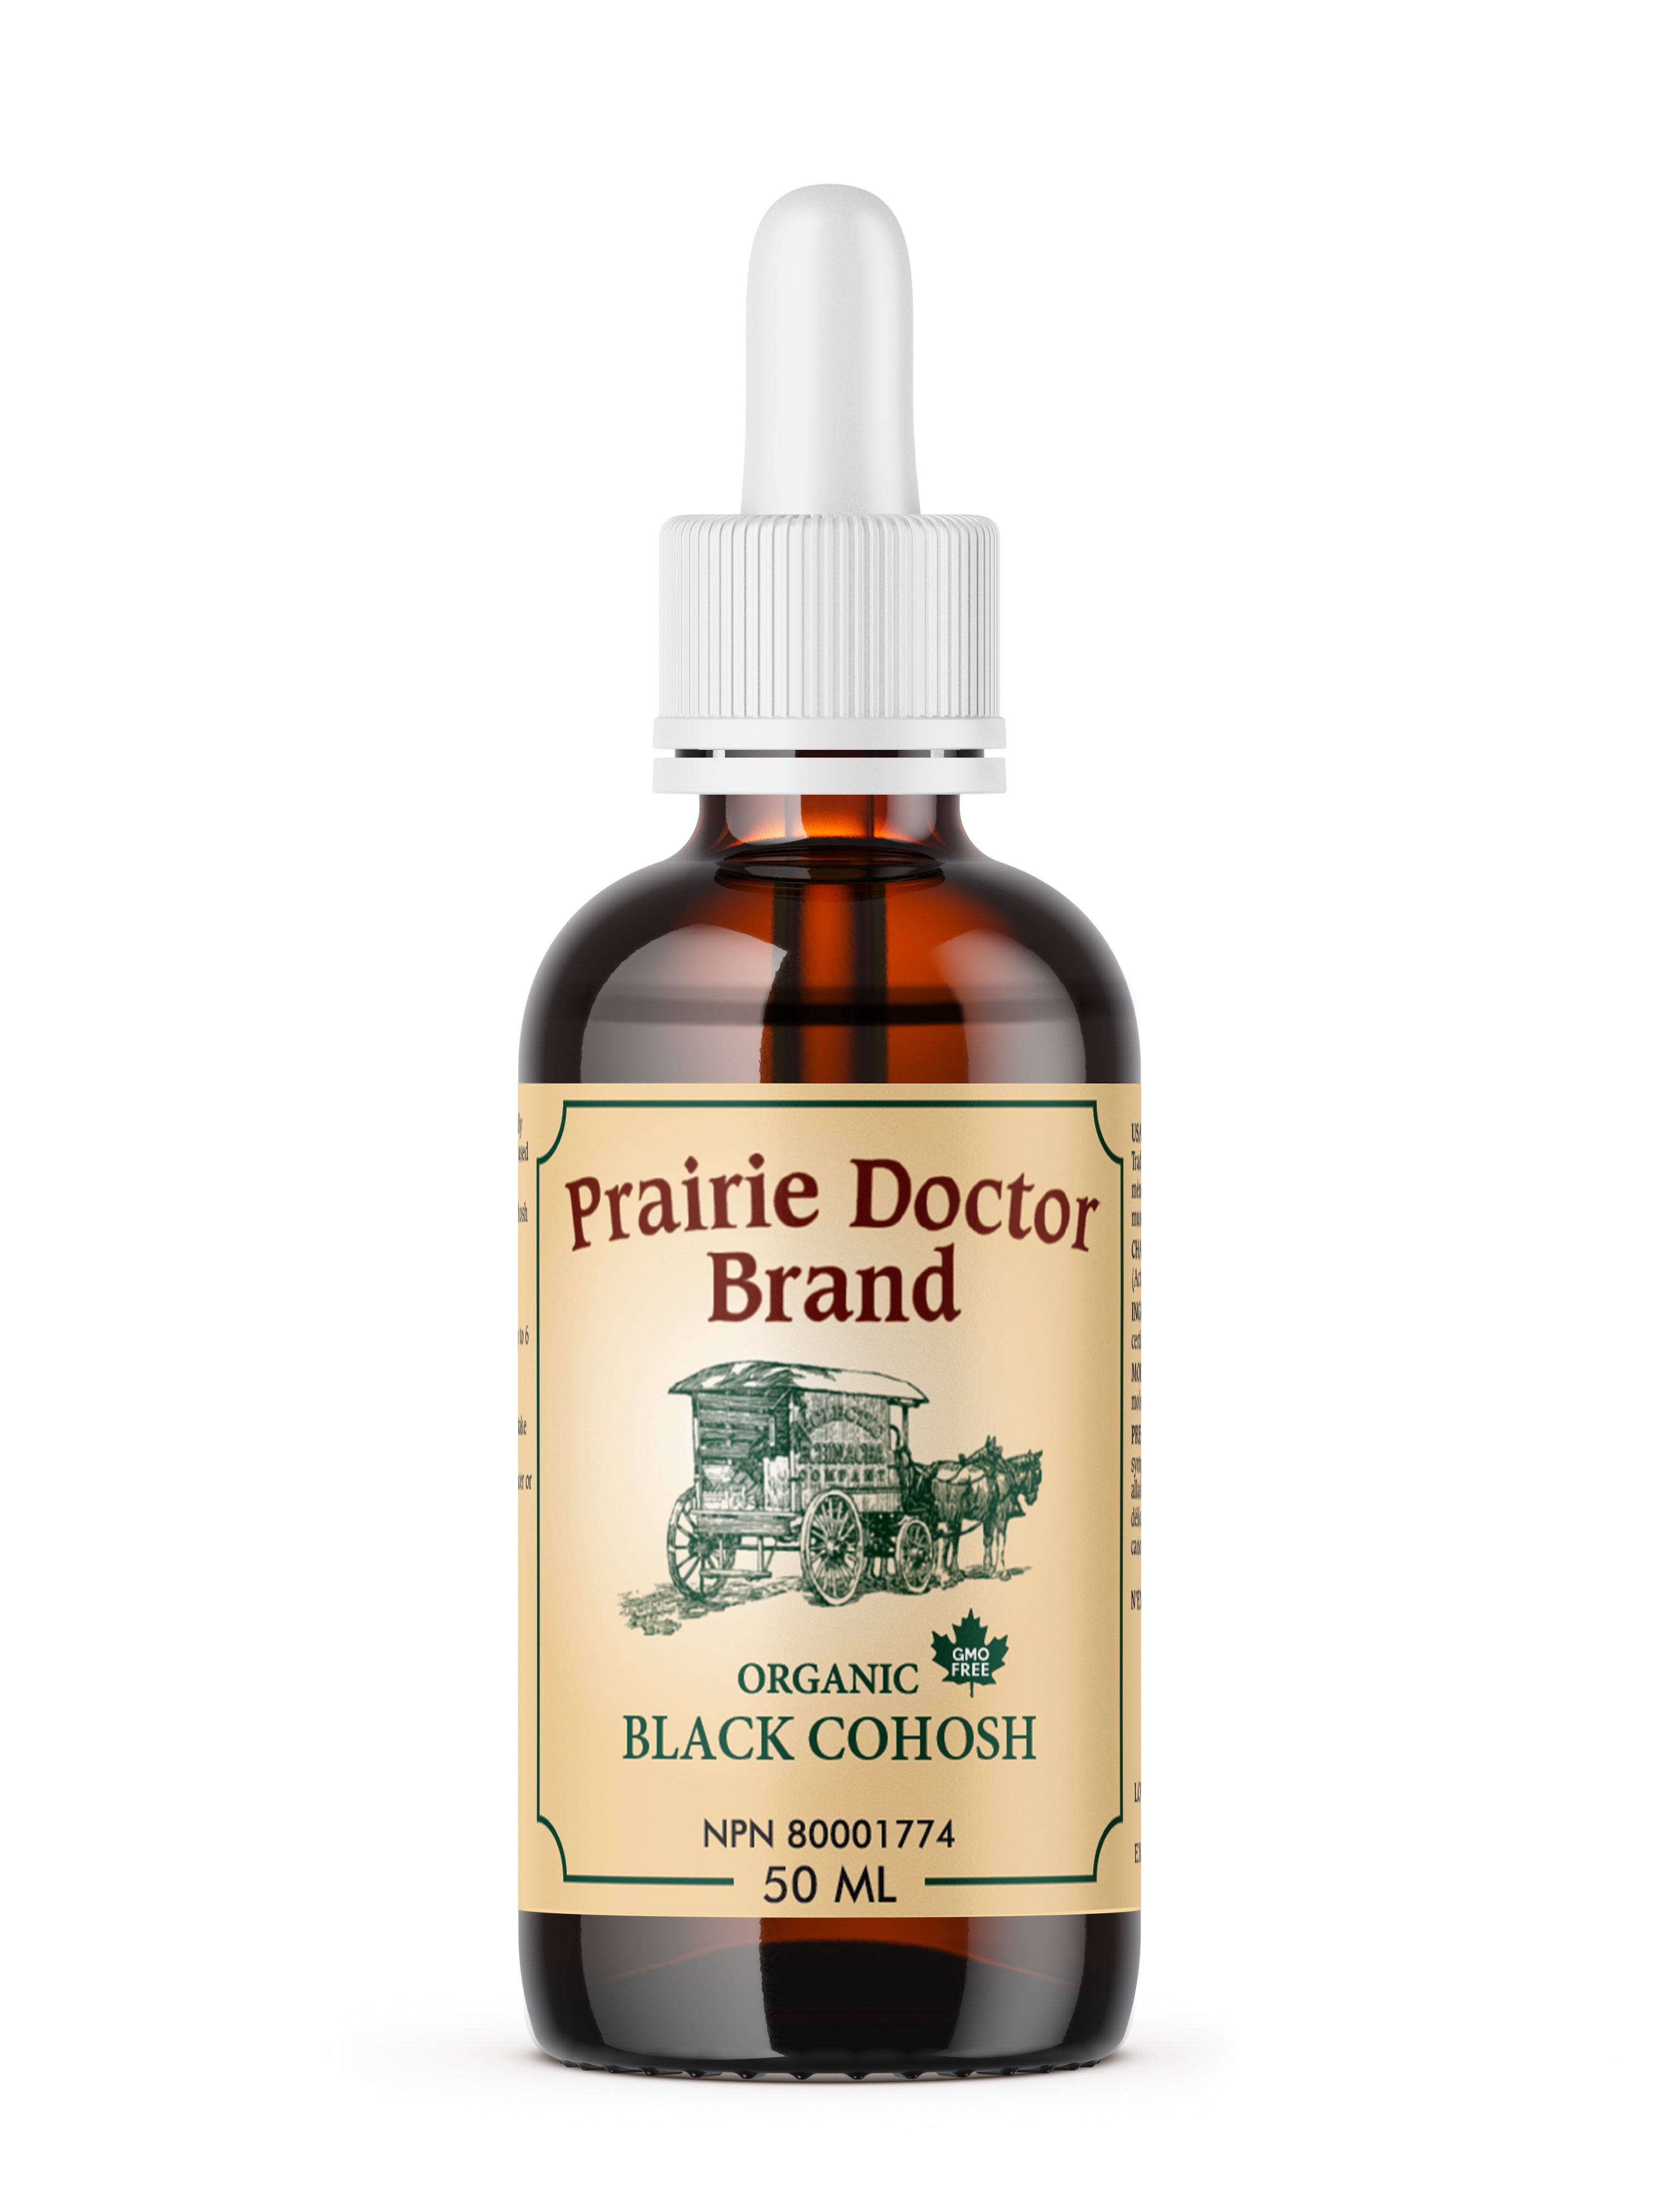 Prairie Doctor Black Cohosh (50ml) - Lifestyle Markets